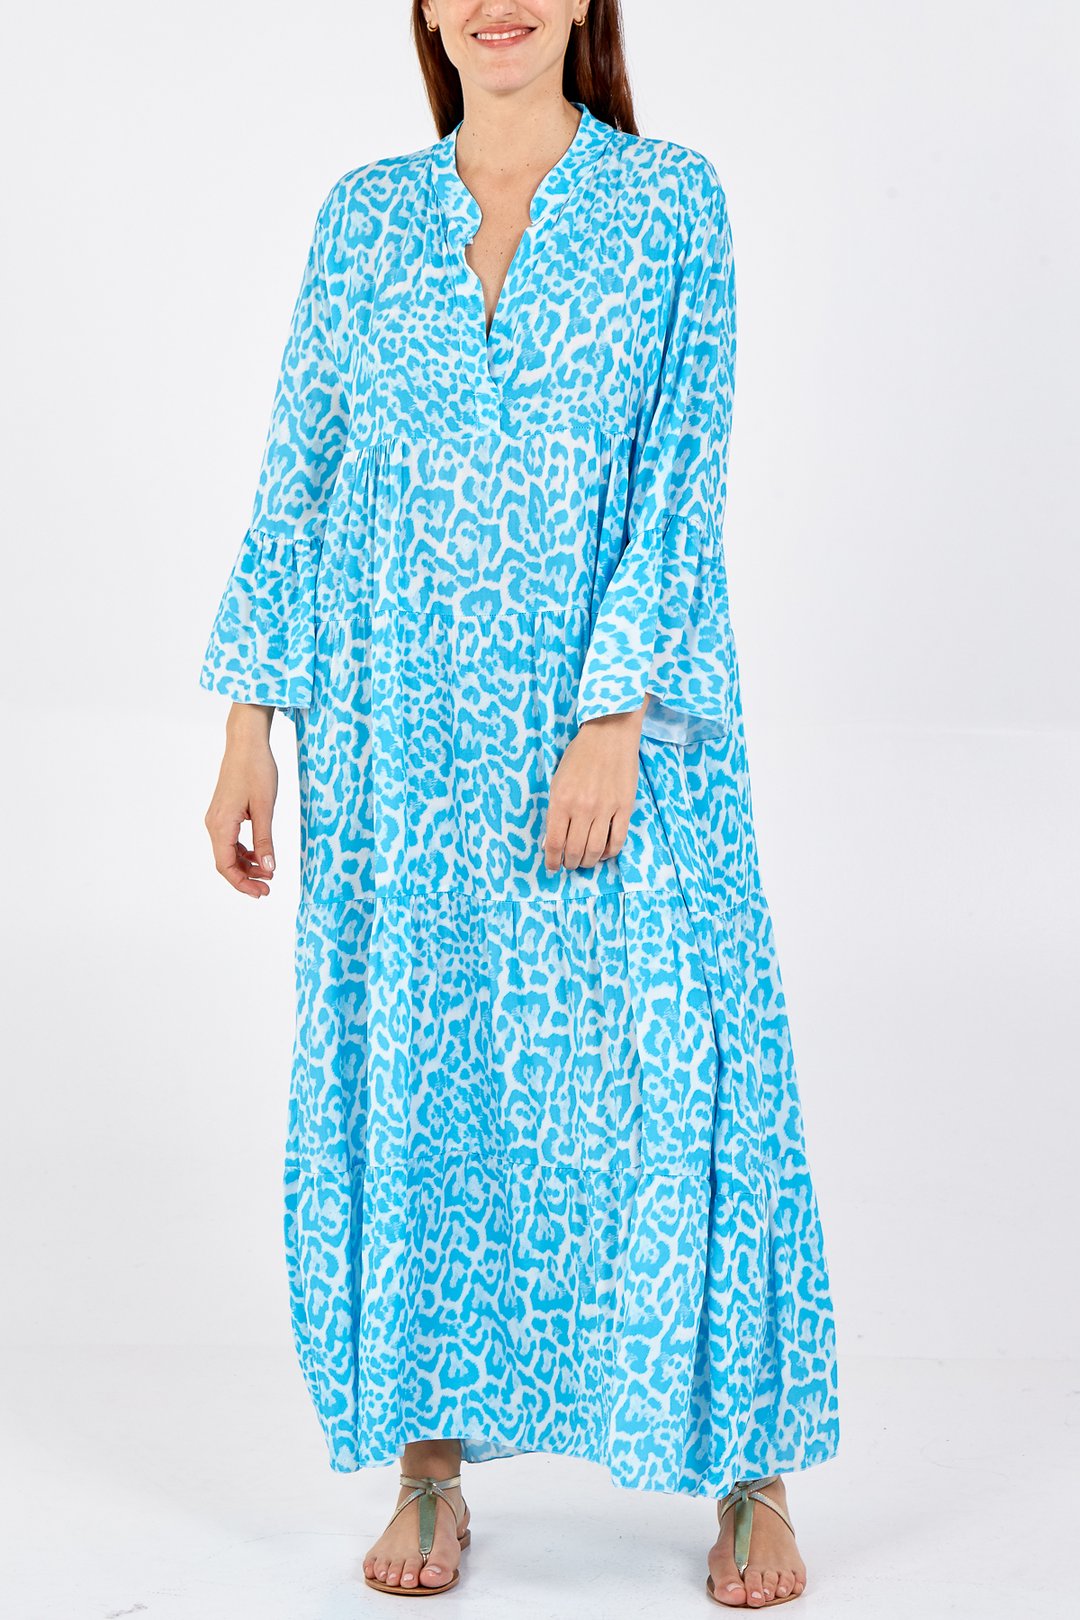 LACEY - Cascade Maxi Tiered Summer Dress - Italian Made